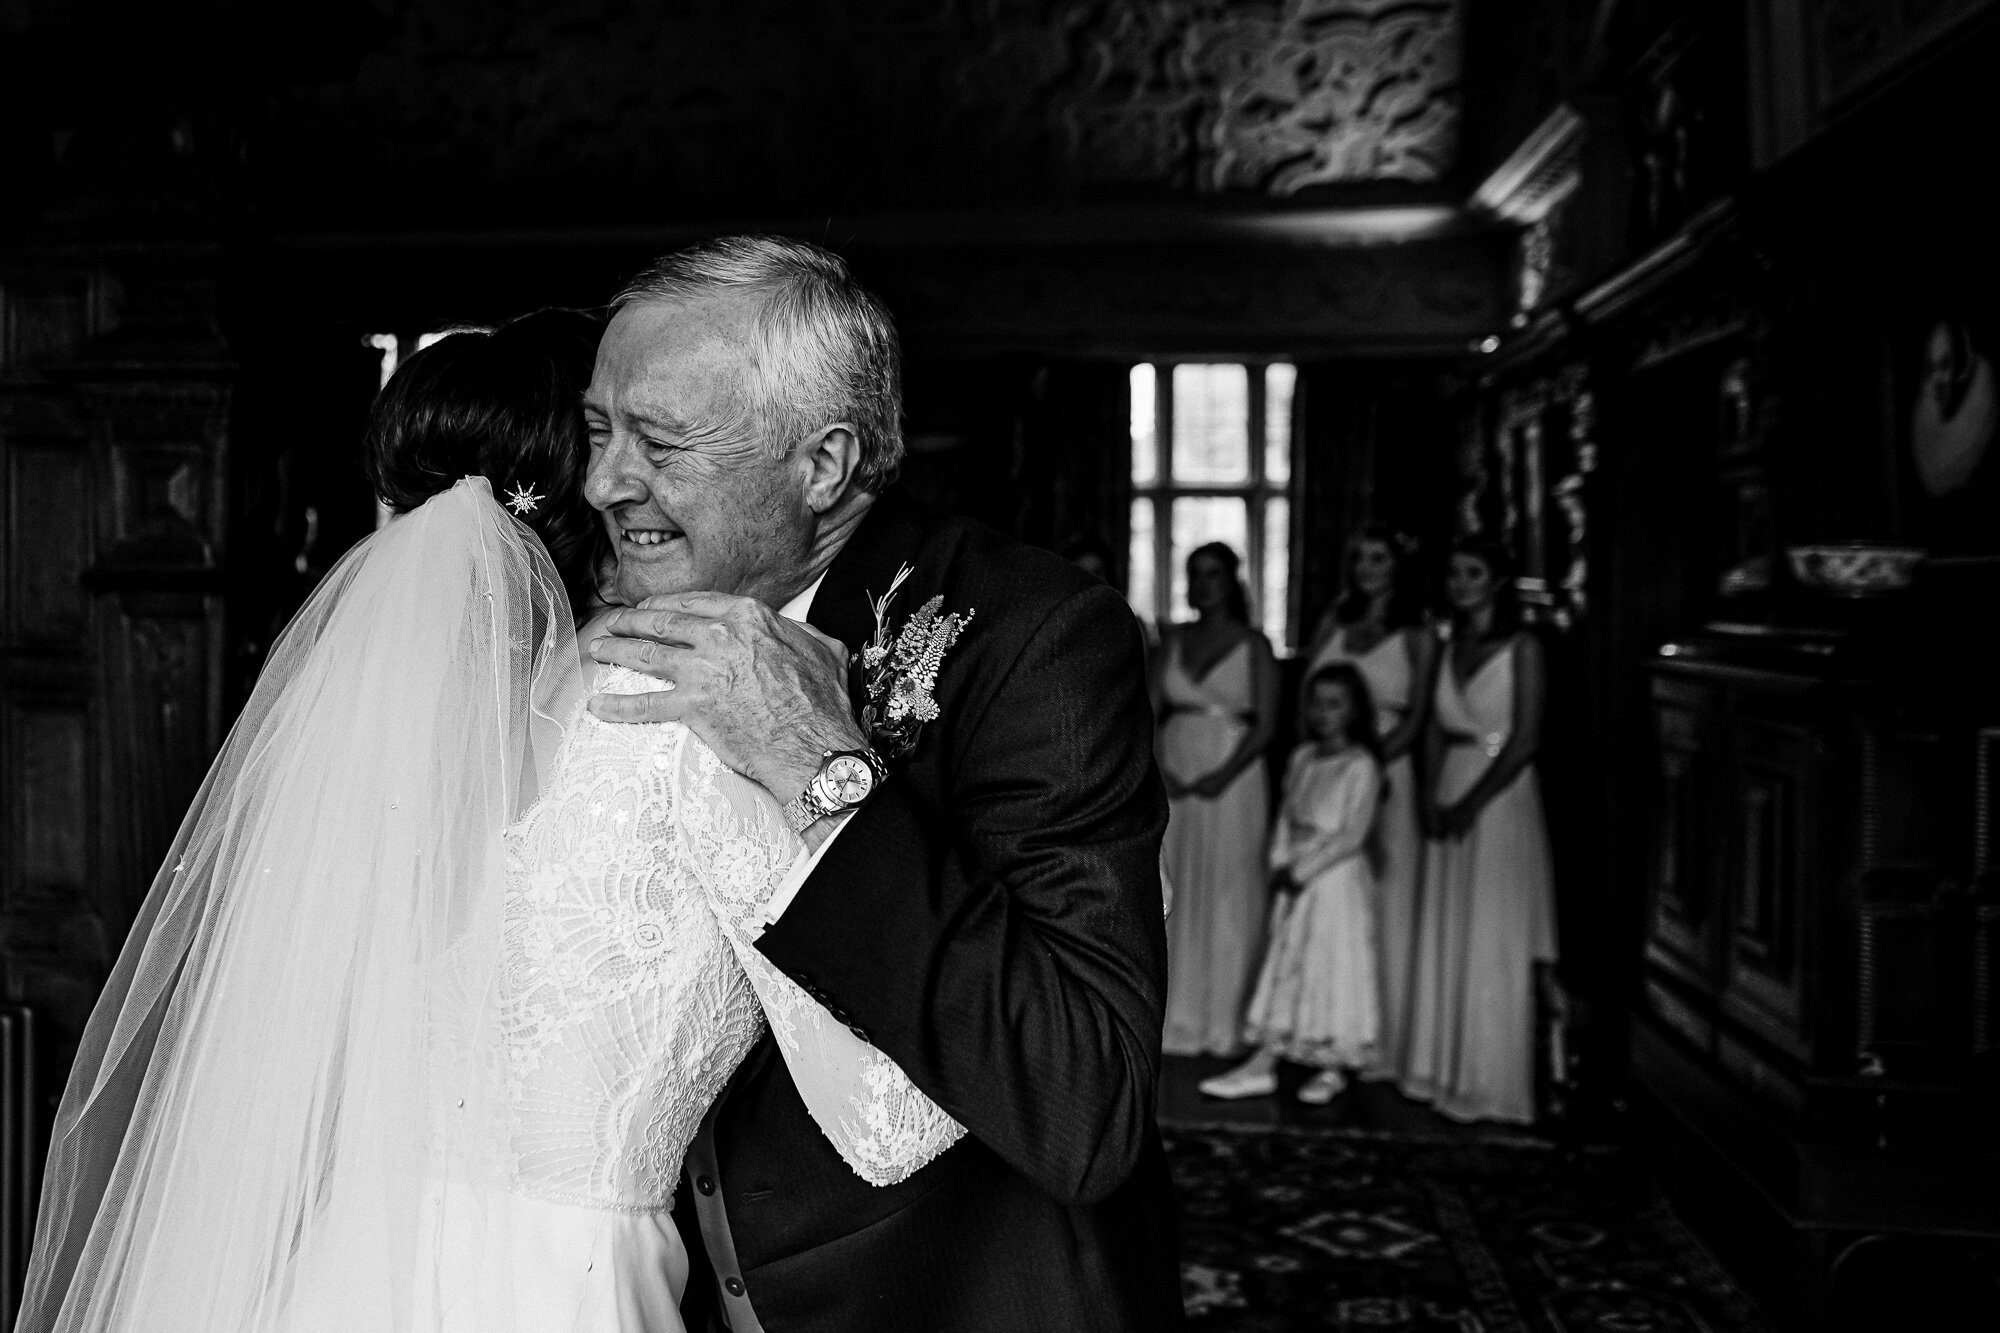 Dorfold Hall wedding photographer Wedding Photography Cheshire wedding photographer (16 of 60).jpg